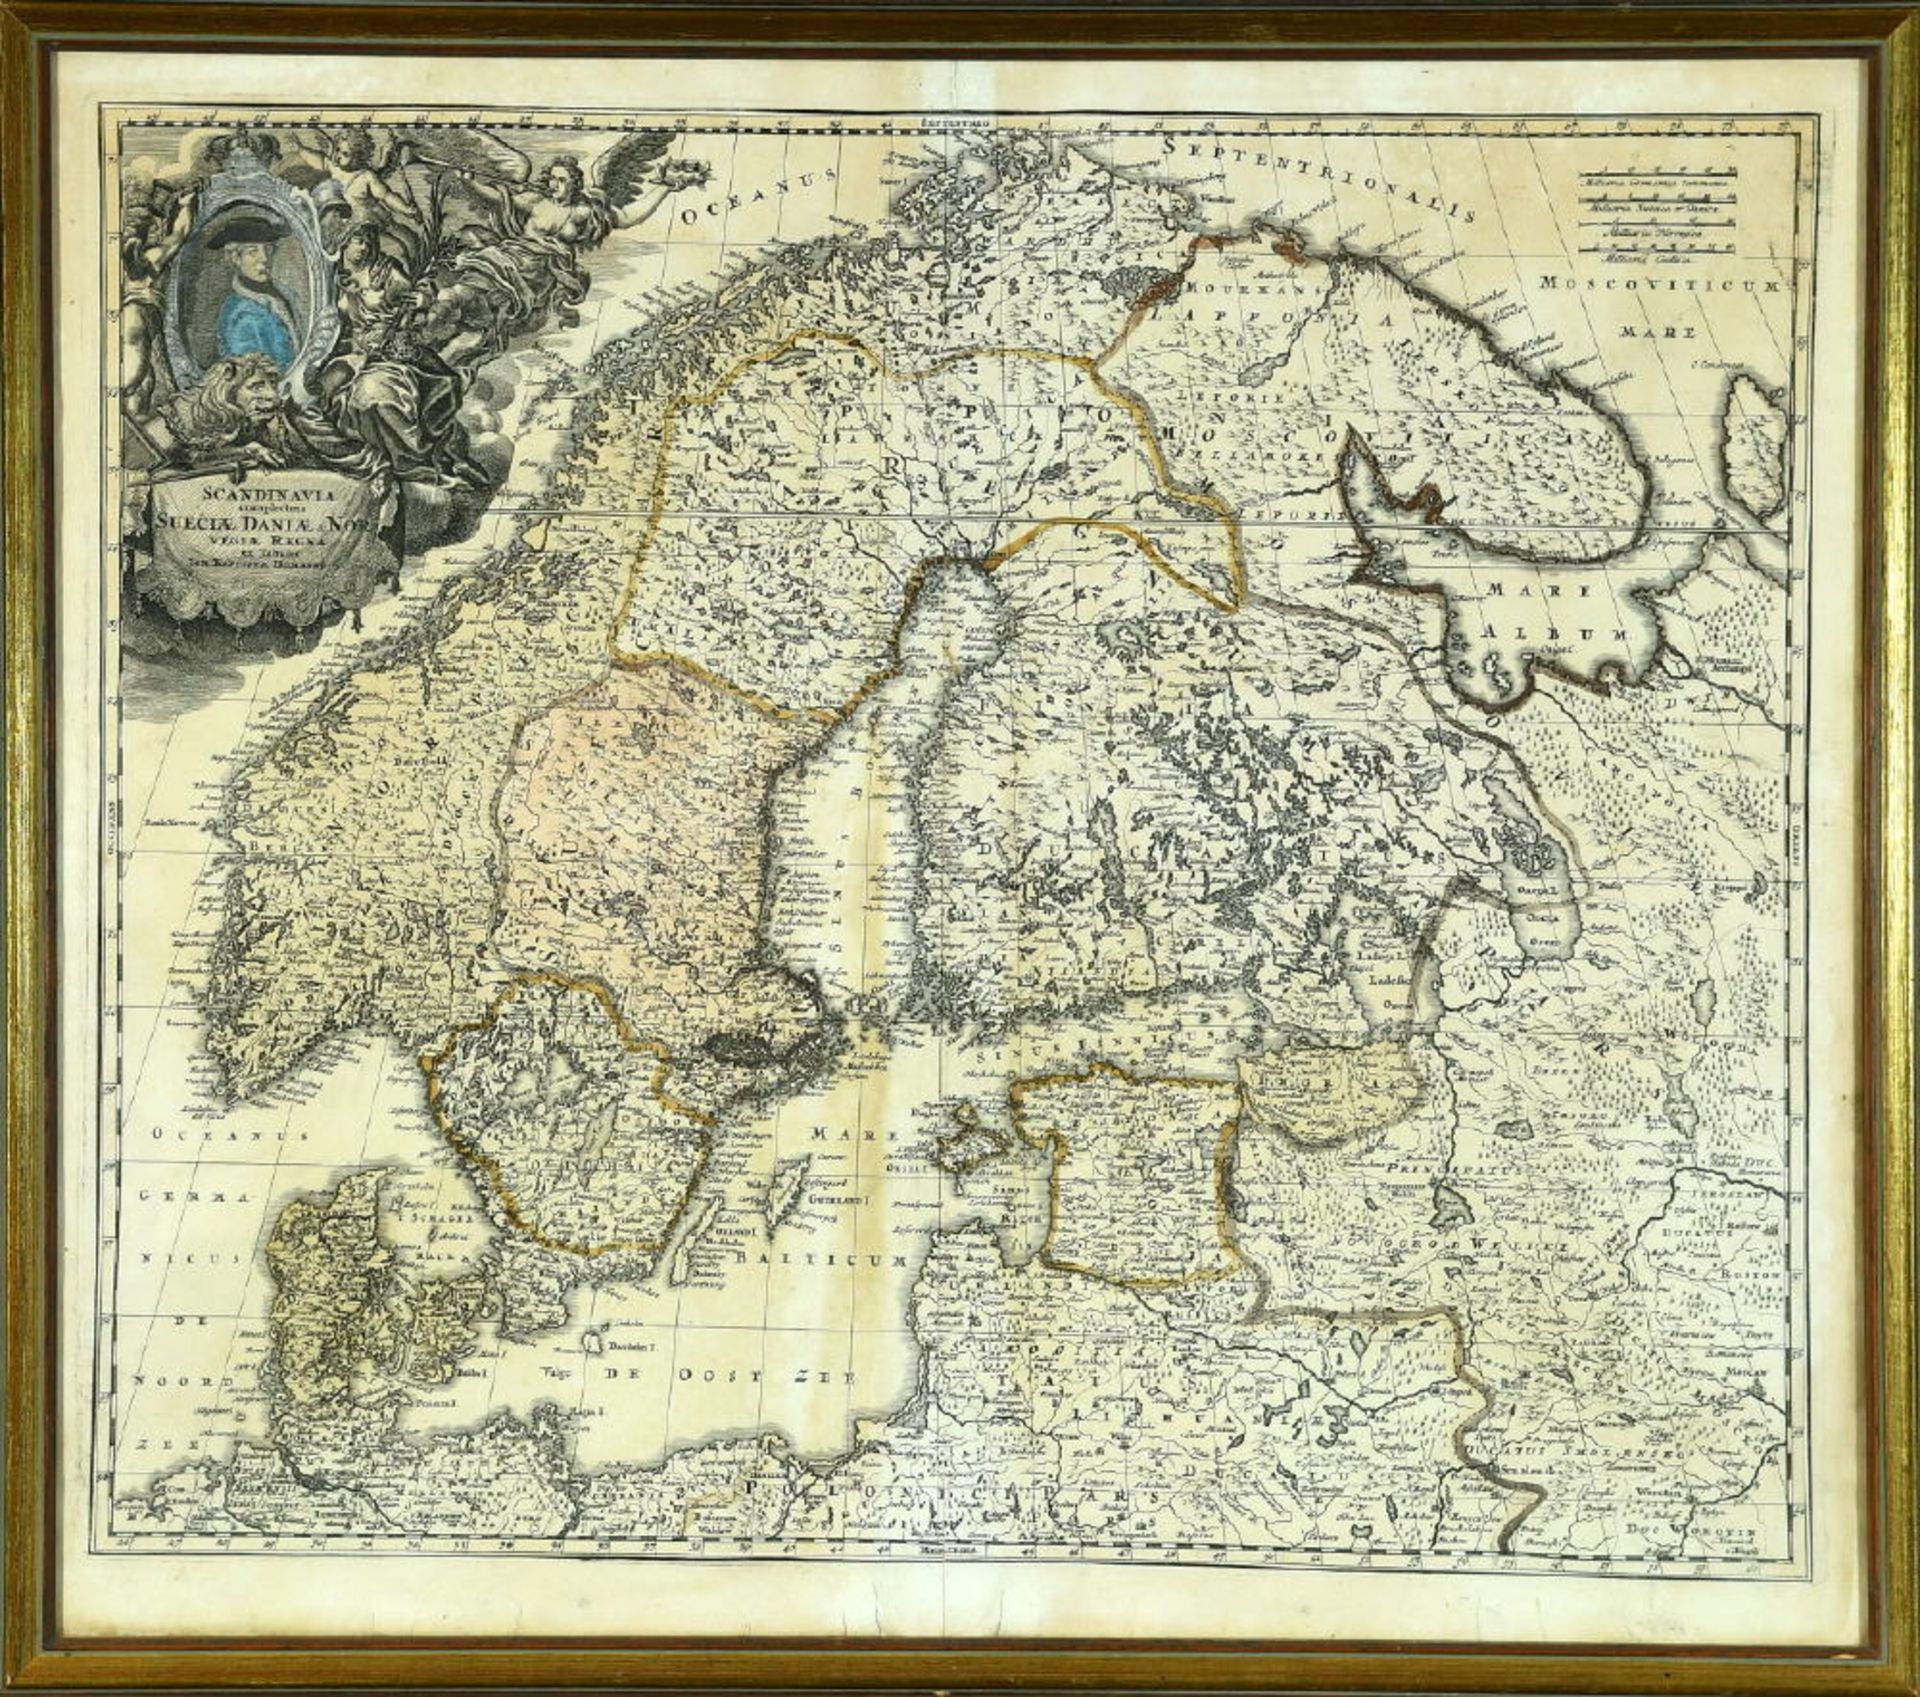 Landkarte "Scandinavia complectens Sueciae, Daniae et Norvegiae..."